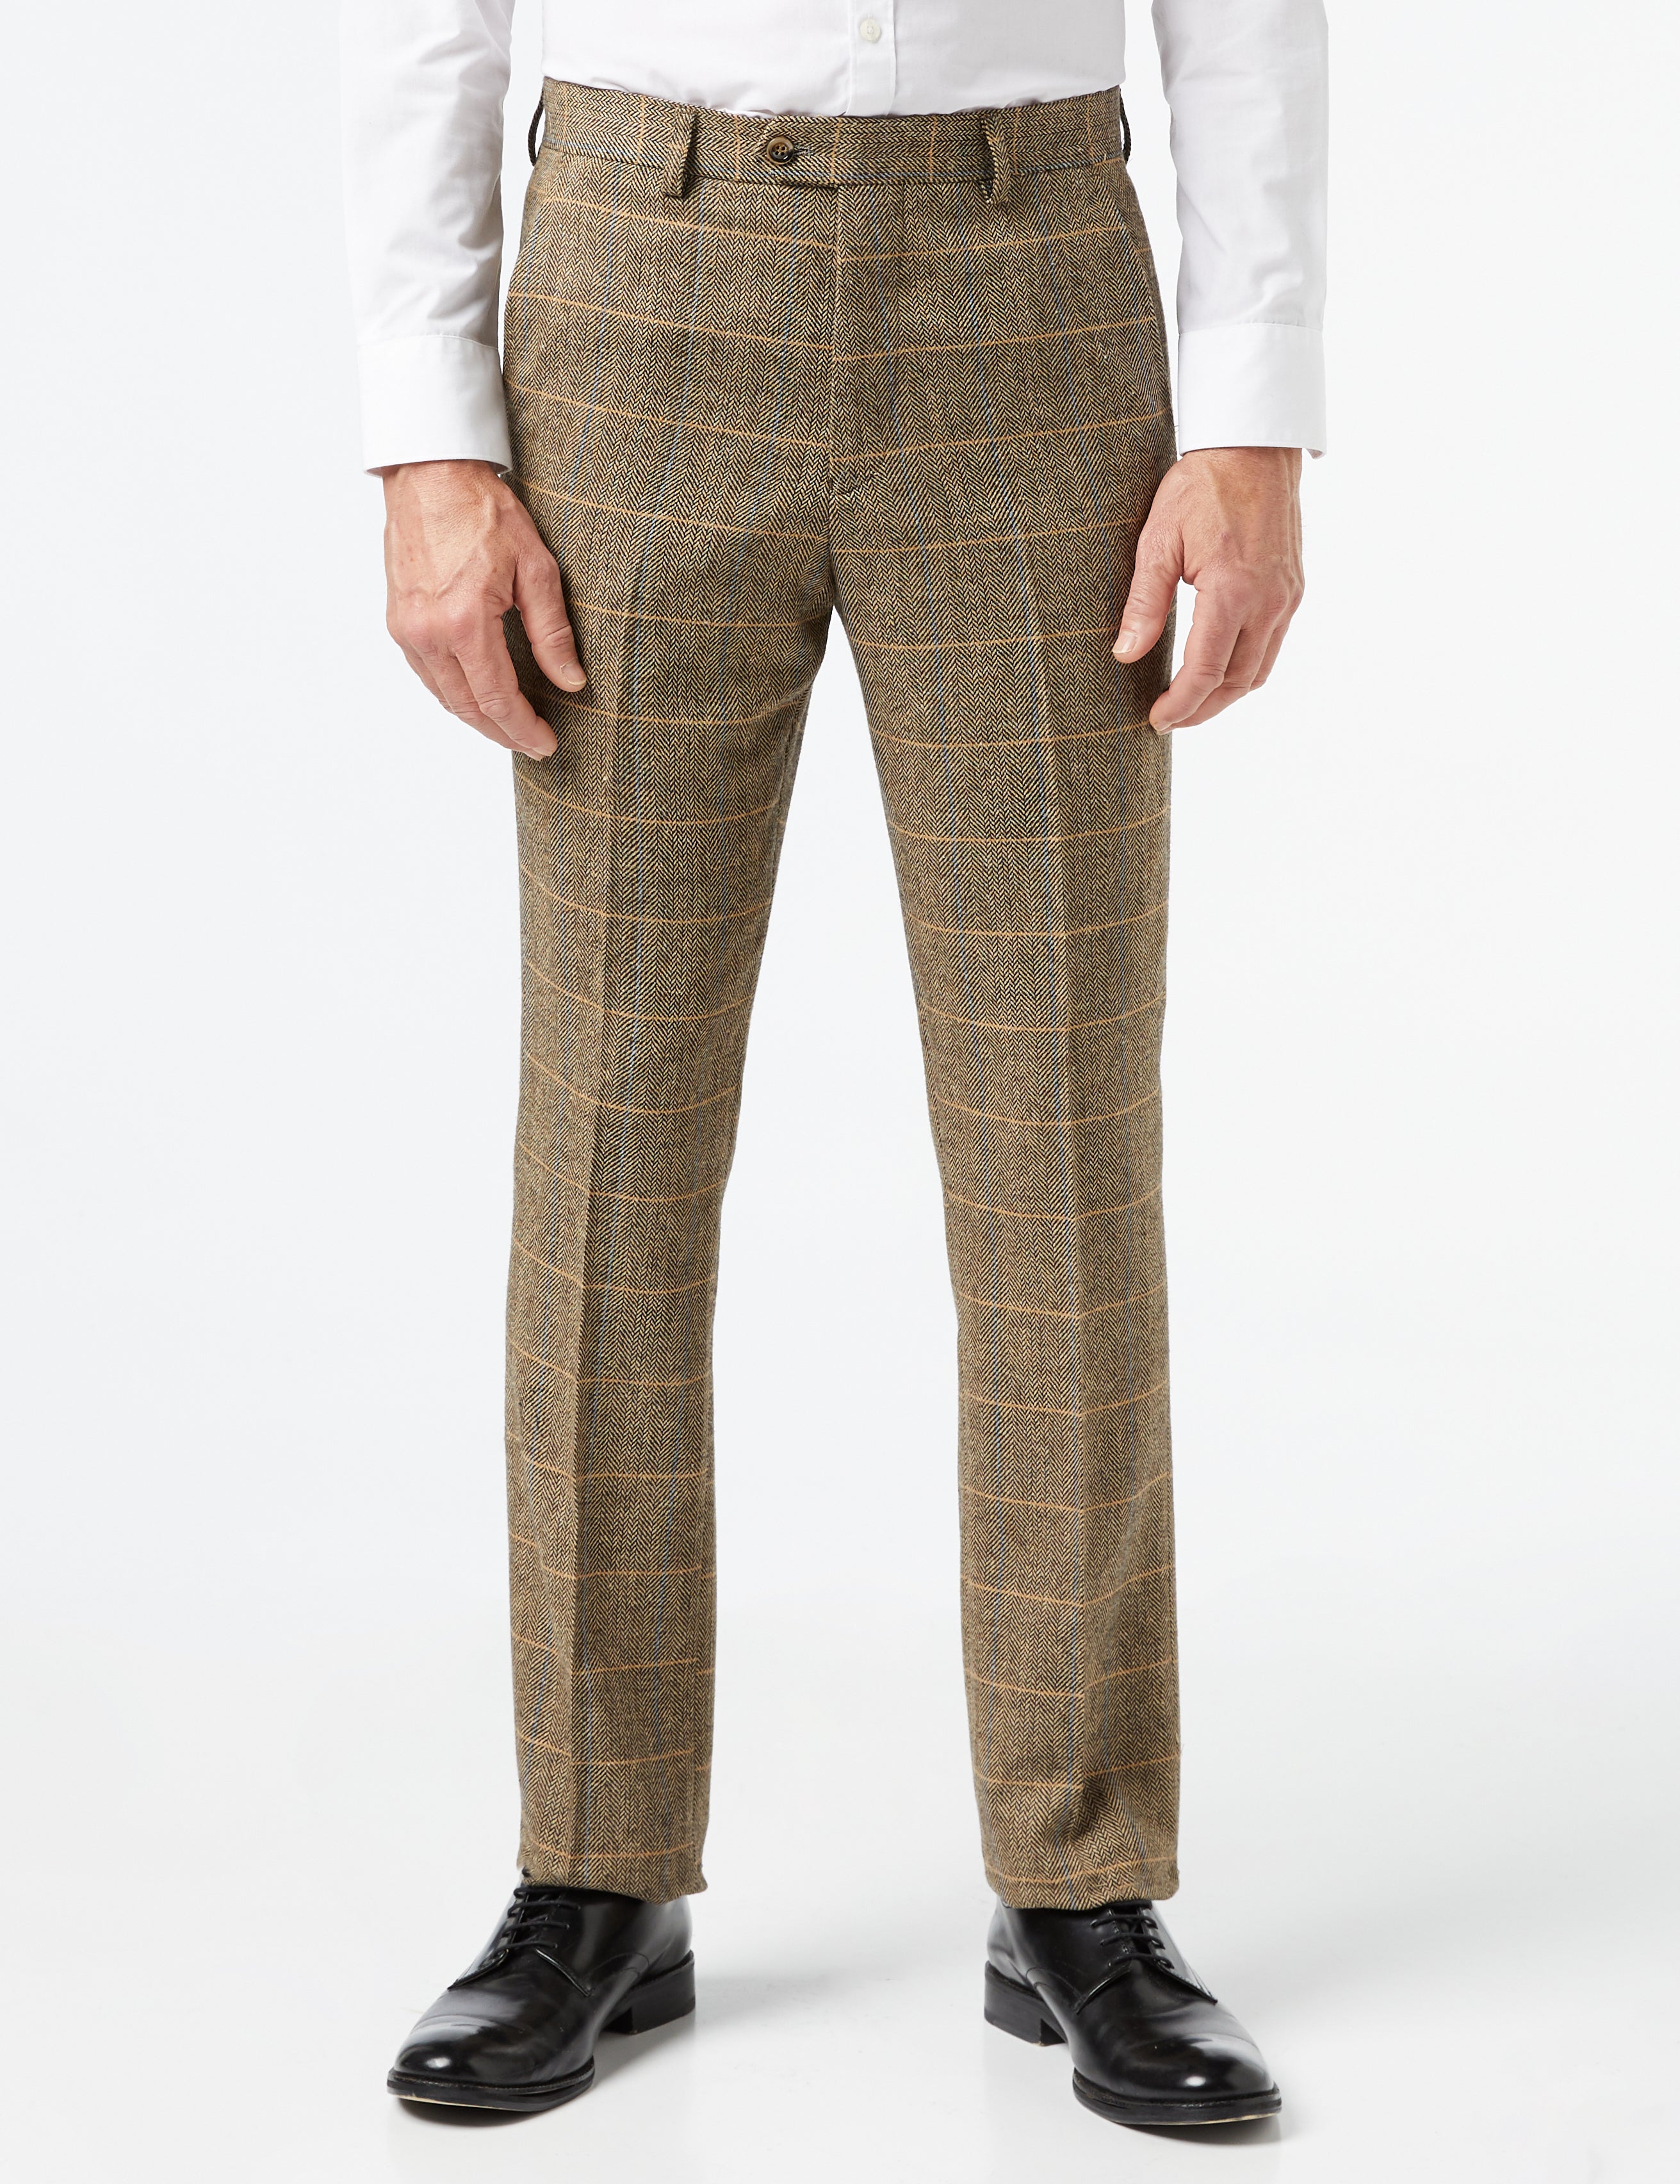 Mens 3 Piece Tweed Suit Tan Herringbone Check Retro Tailored Fit